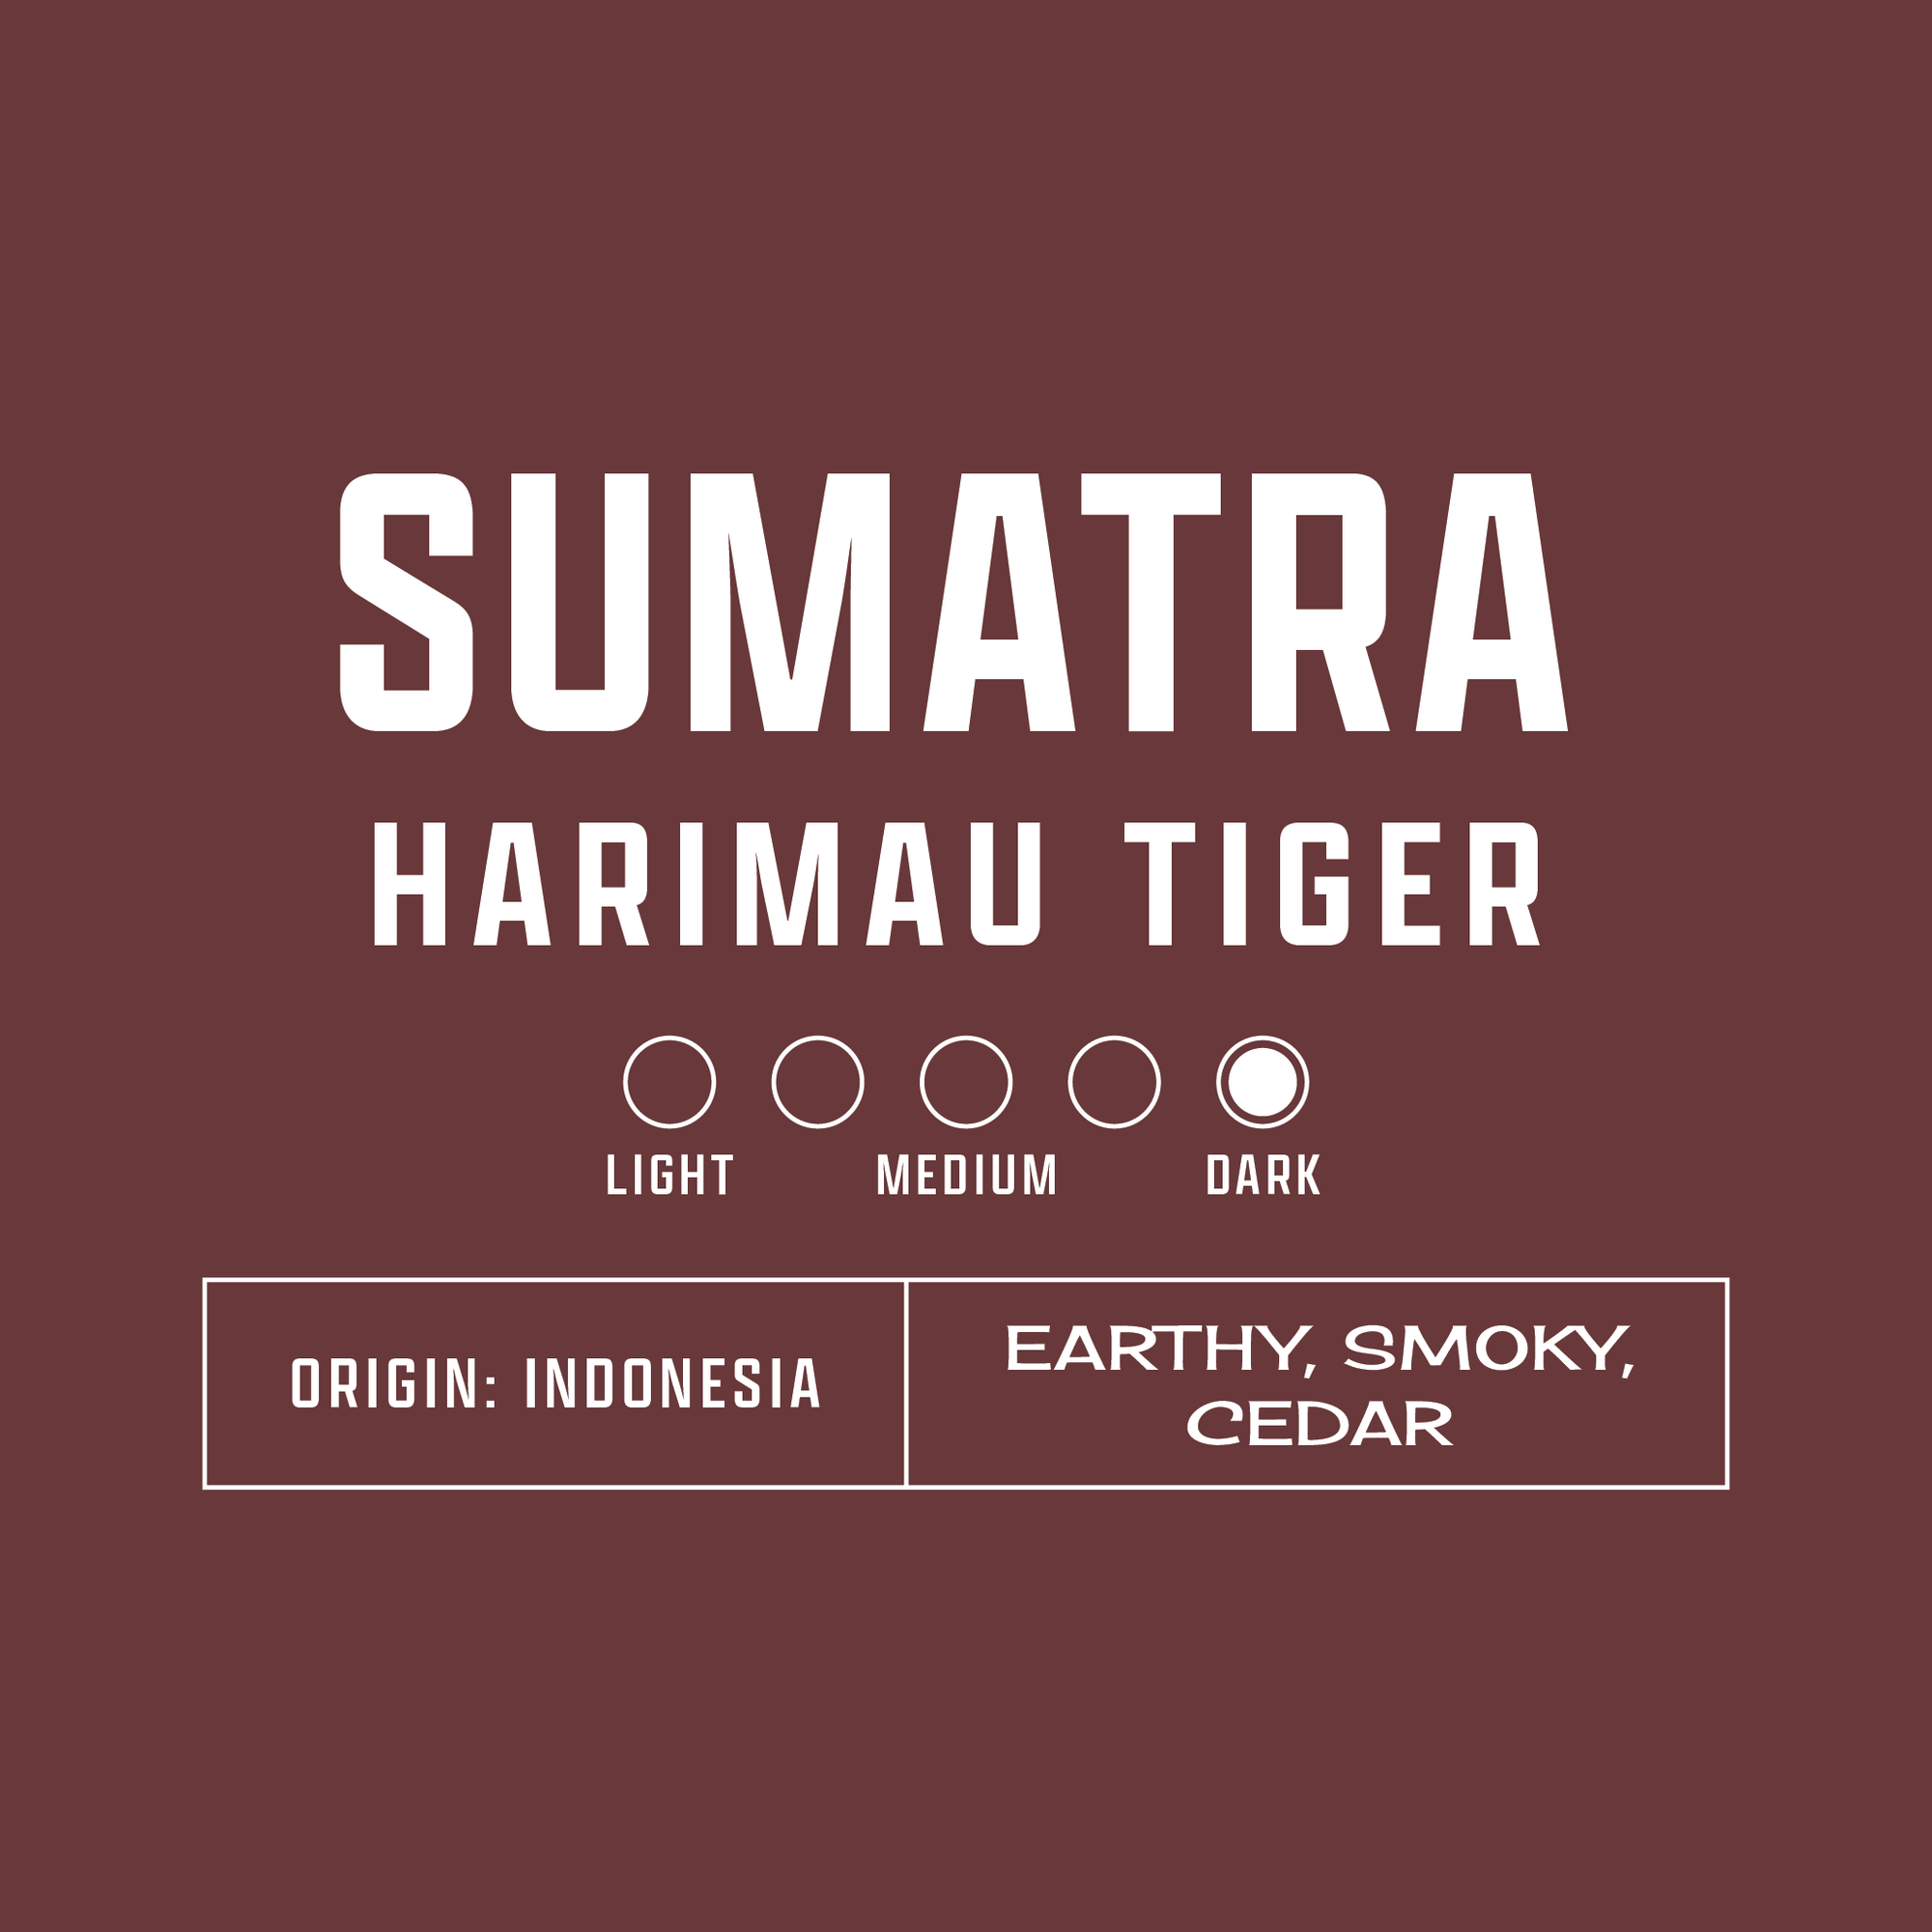 Sumatra Harimau Tiger